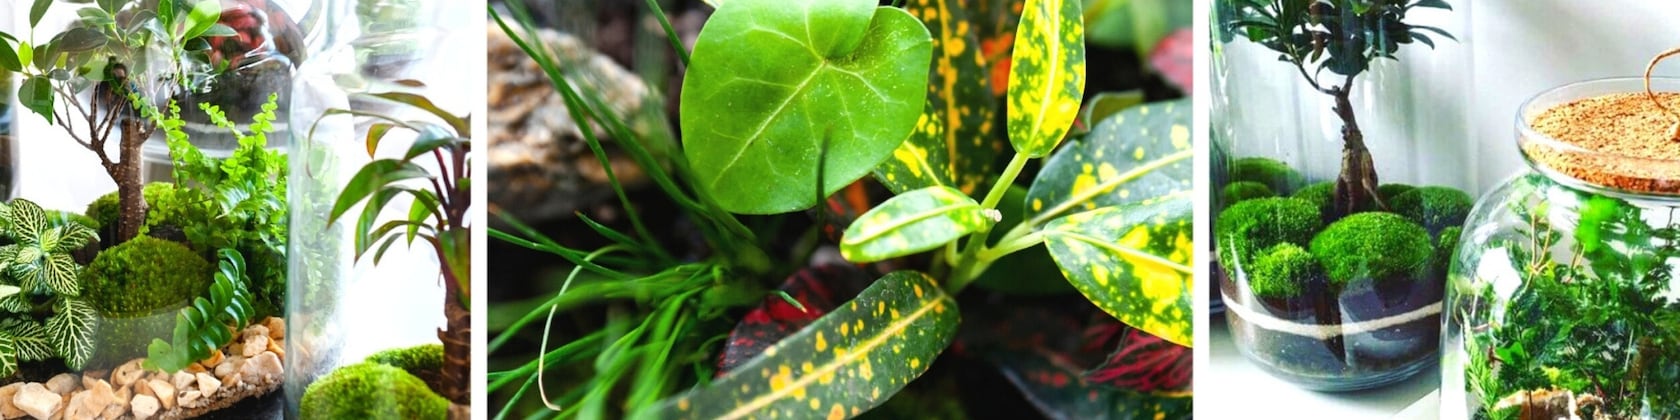 Terrarium végétal - Drop XL met Palm - Ecosystème végétal -↑37 cm